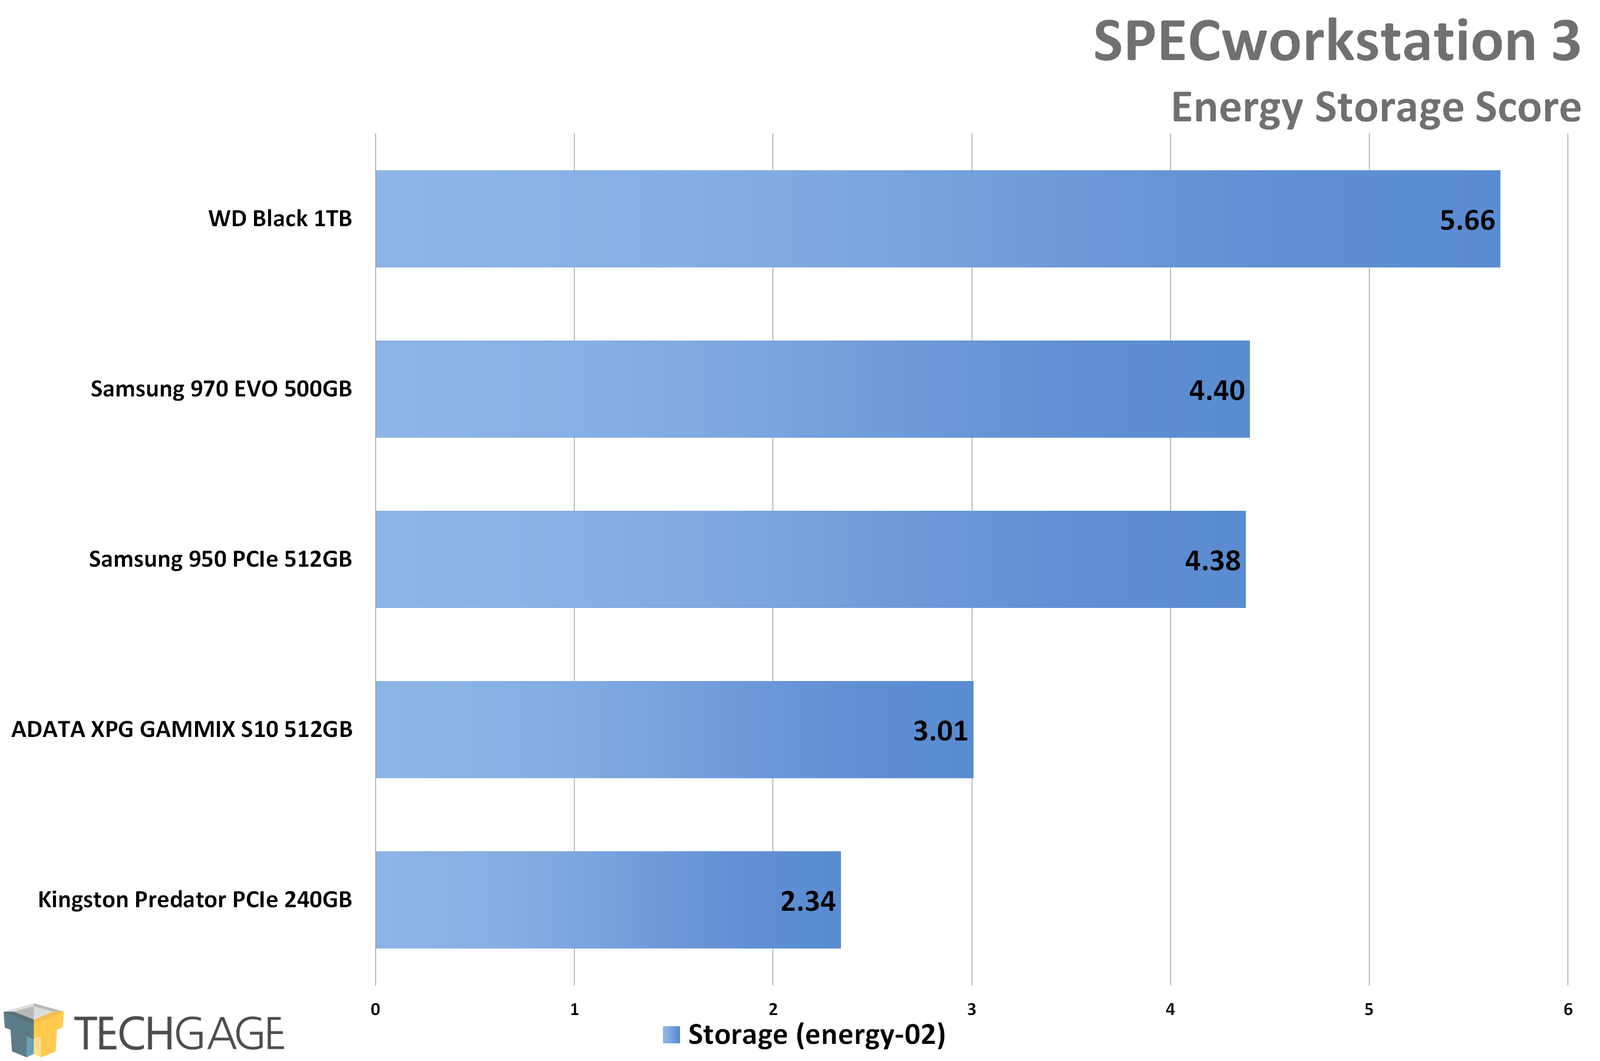 SPECworkstation 3 - Energy Storage Score